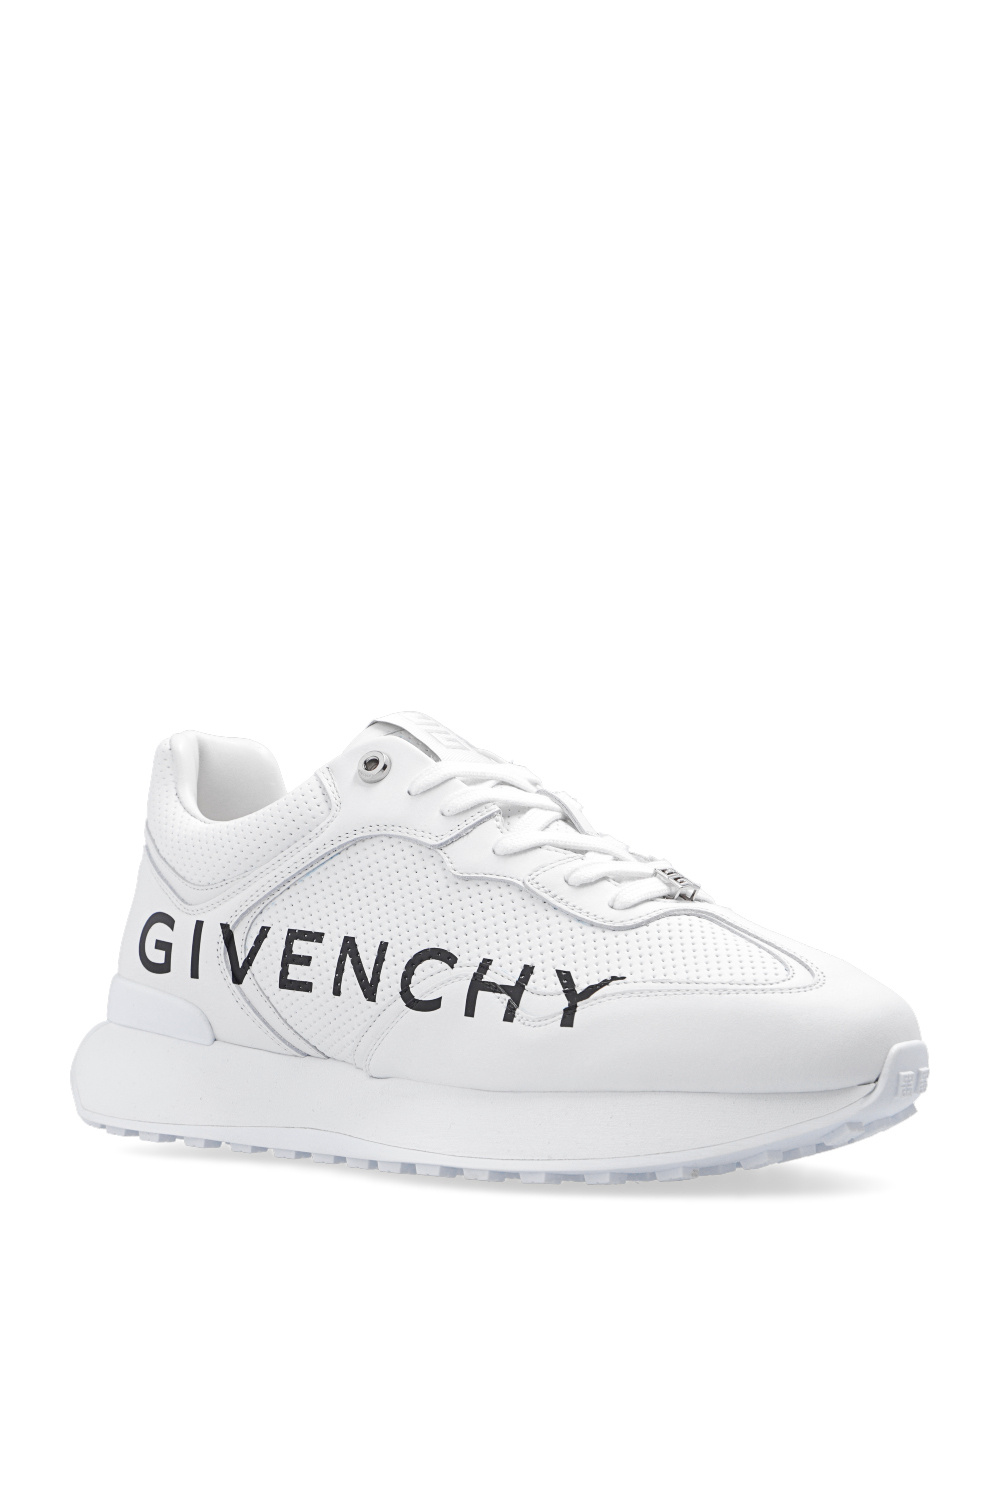 Givenchy ‘GIV Runner’ sneakers | Men's Shoes | Vitkac